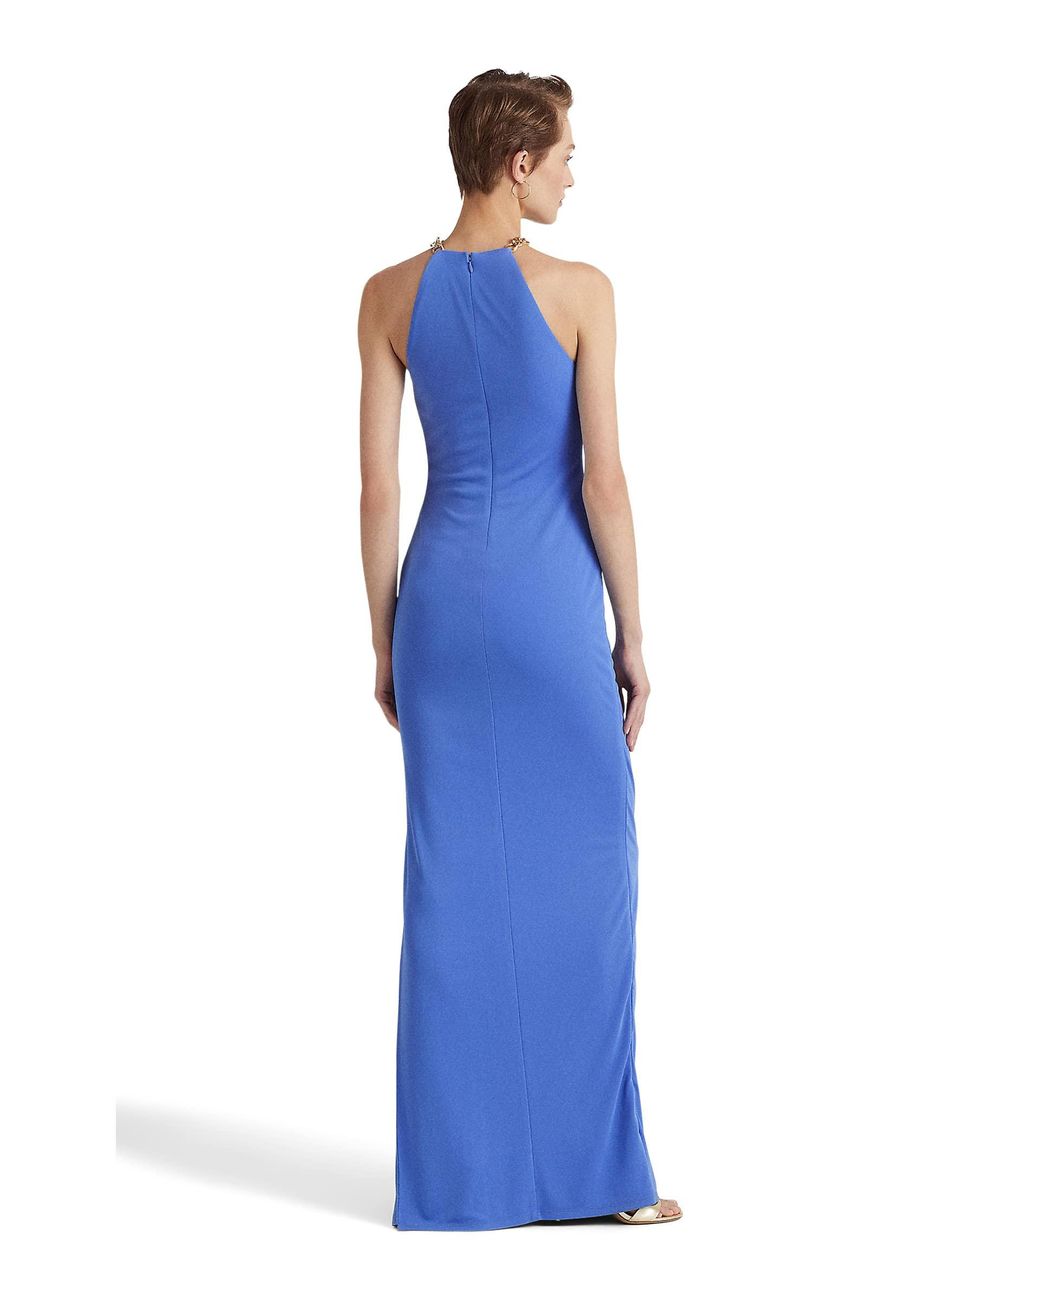 Lauren by Ralph Lauren Twist-front Jersey Dress in Blue | Lyst